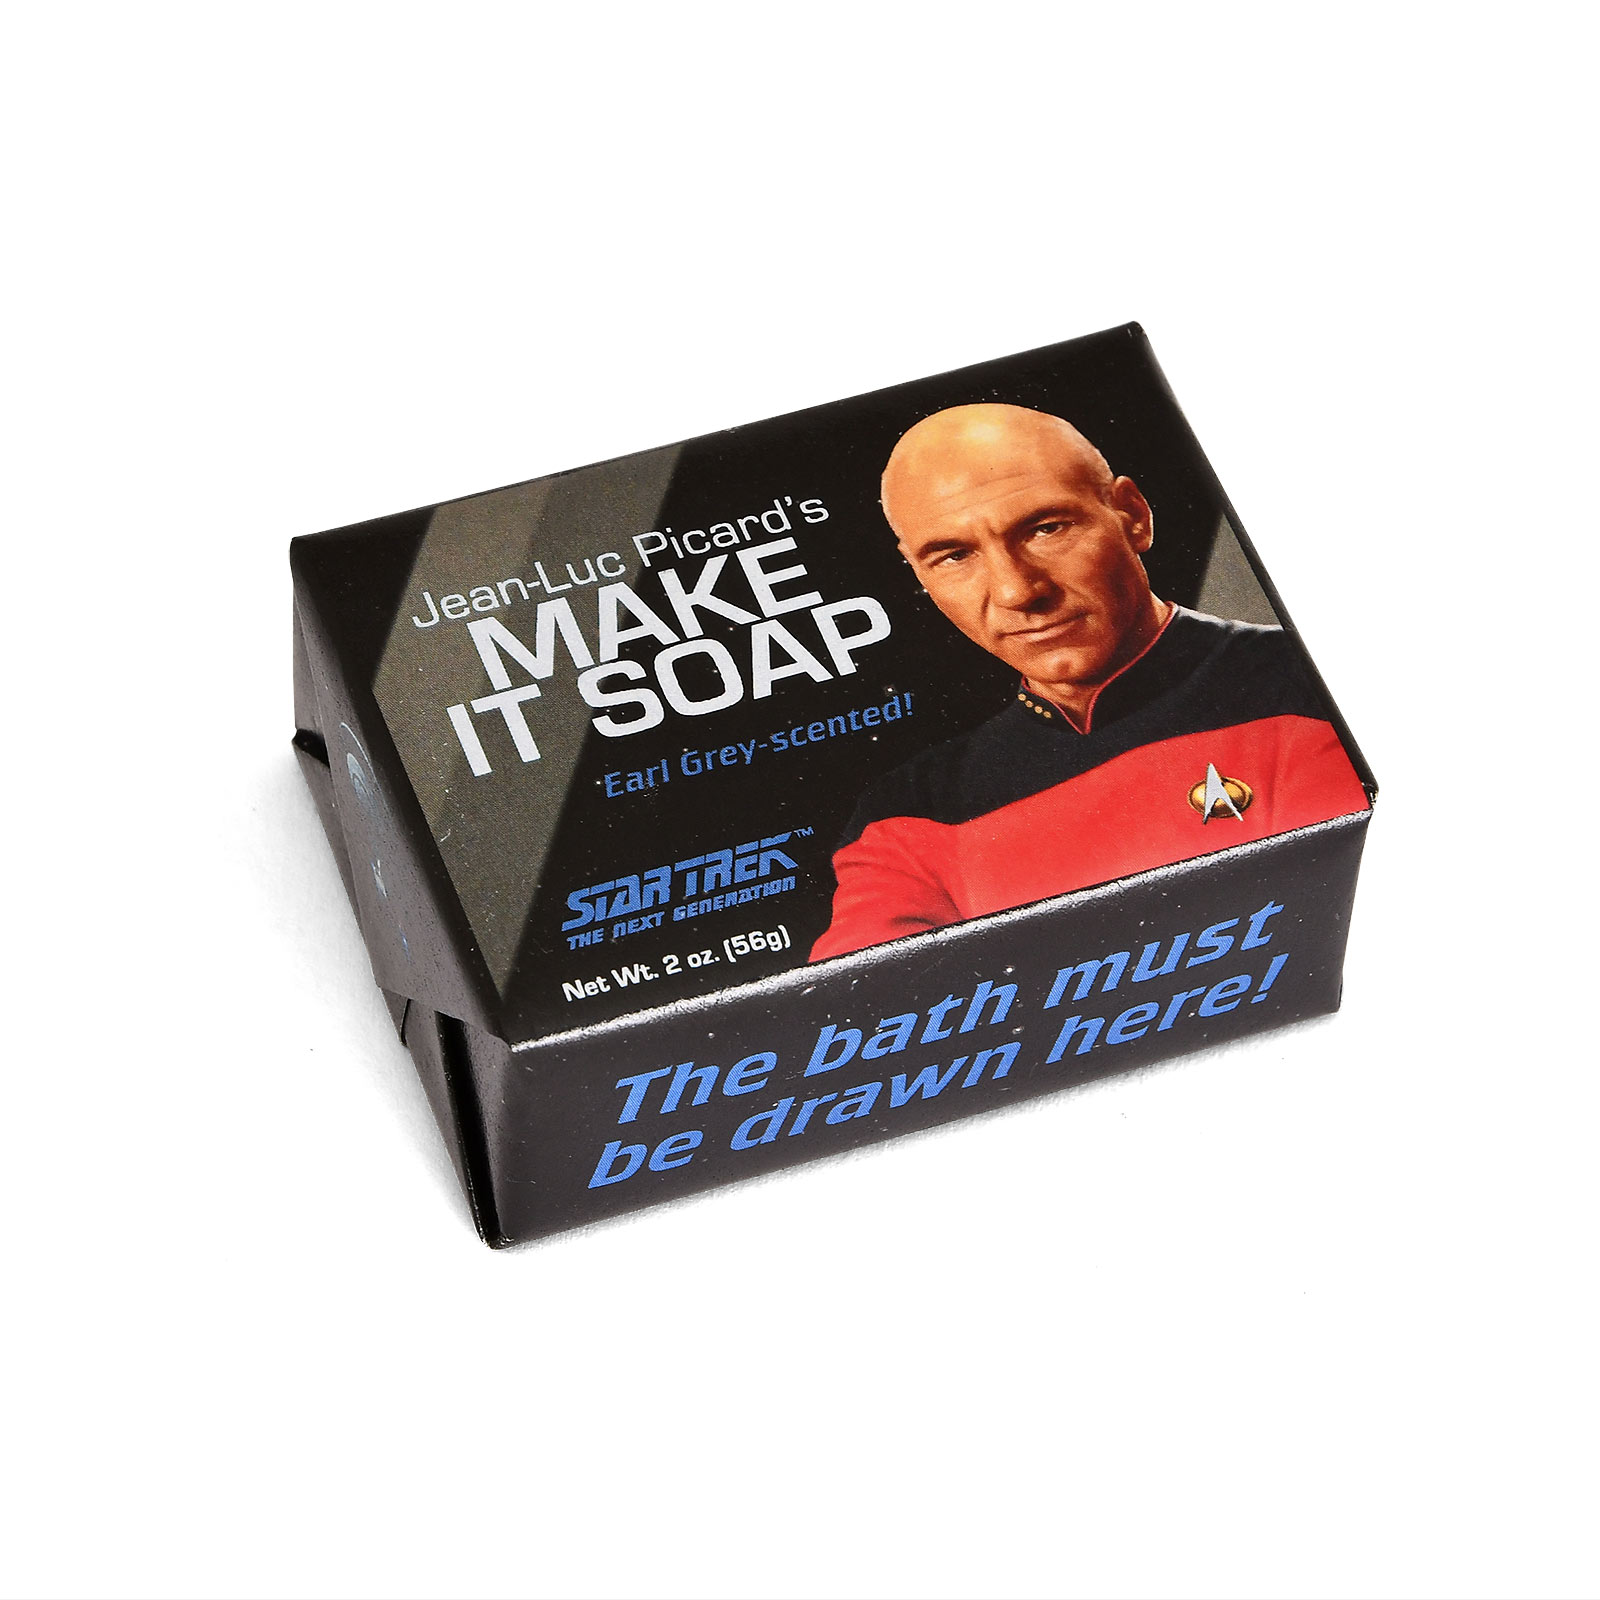 Star Trek - Make it Soap! Seife